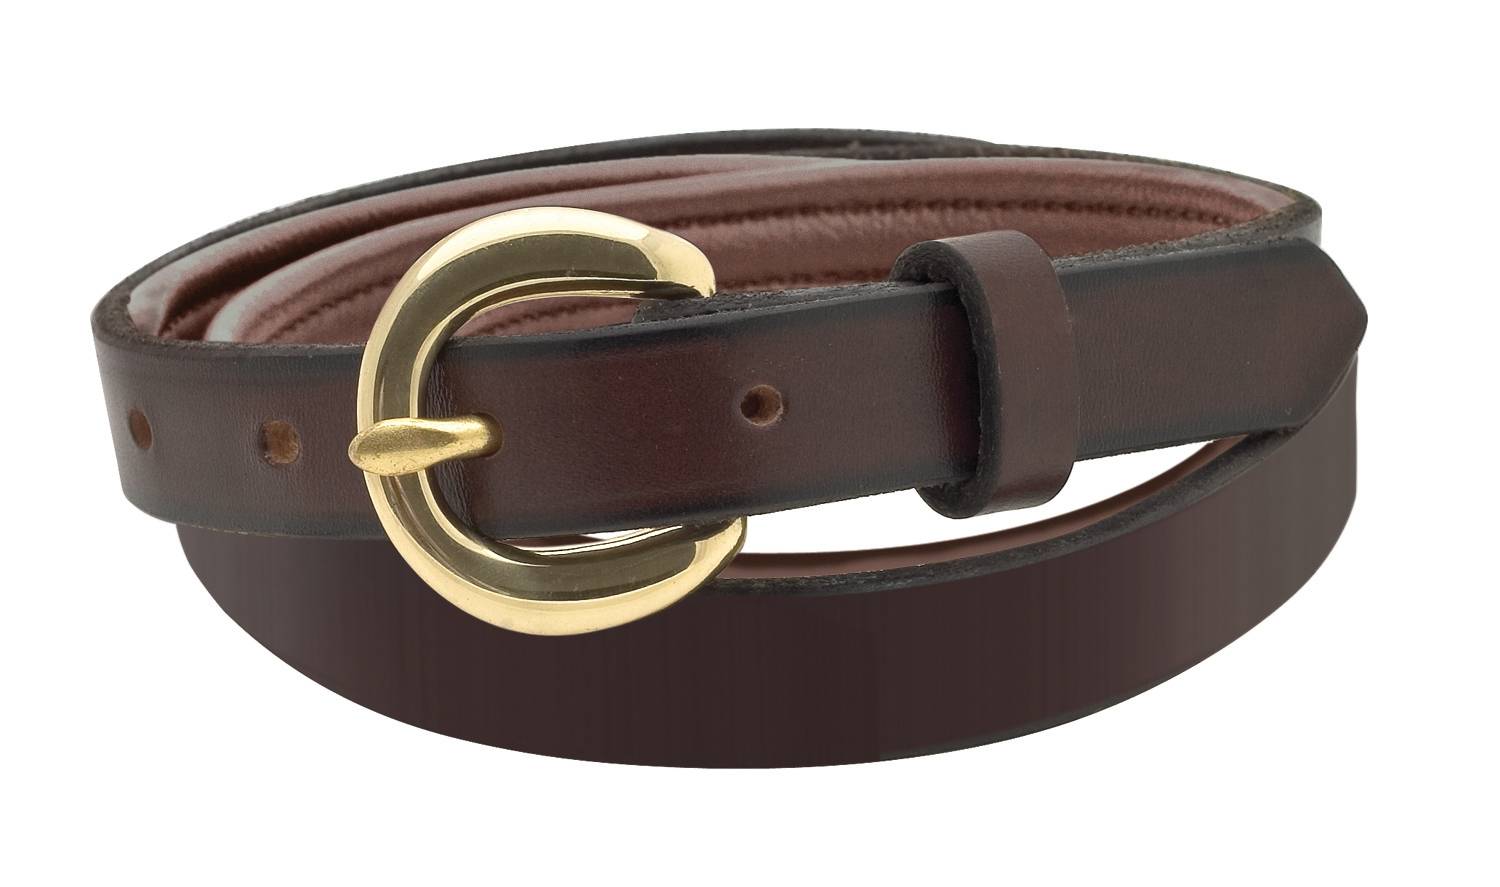 Perri's Padded Leather Belt